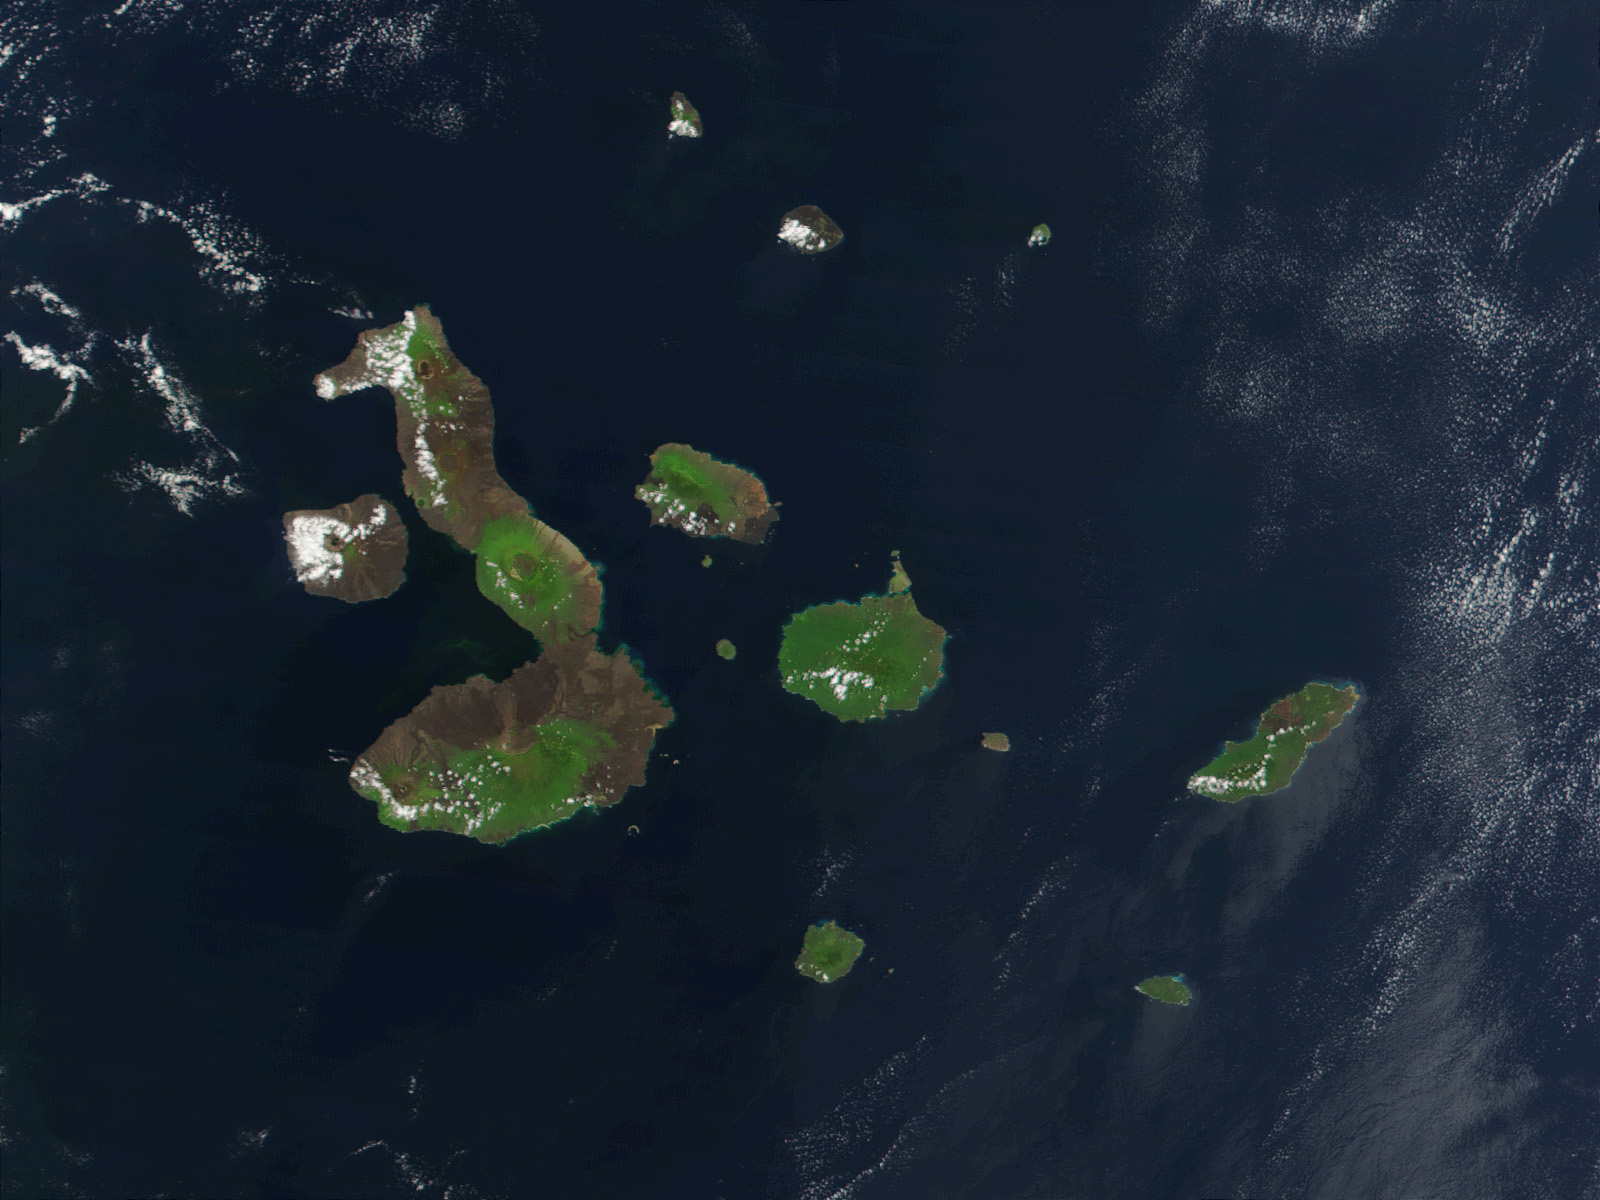 http://upload.wikimedia.org/wikipedia/commons/b/b1/Galapagos-satellite-2002.jpg